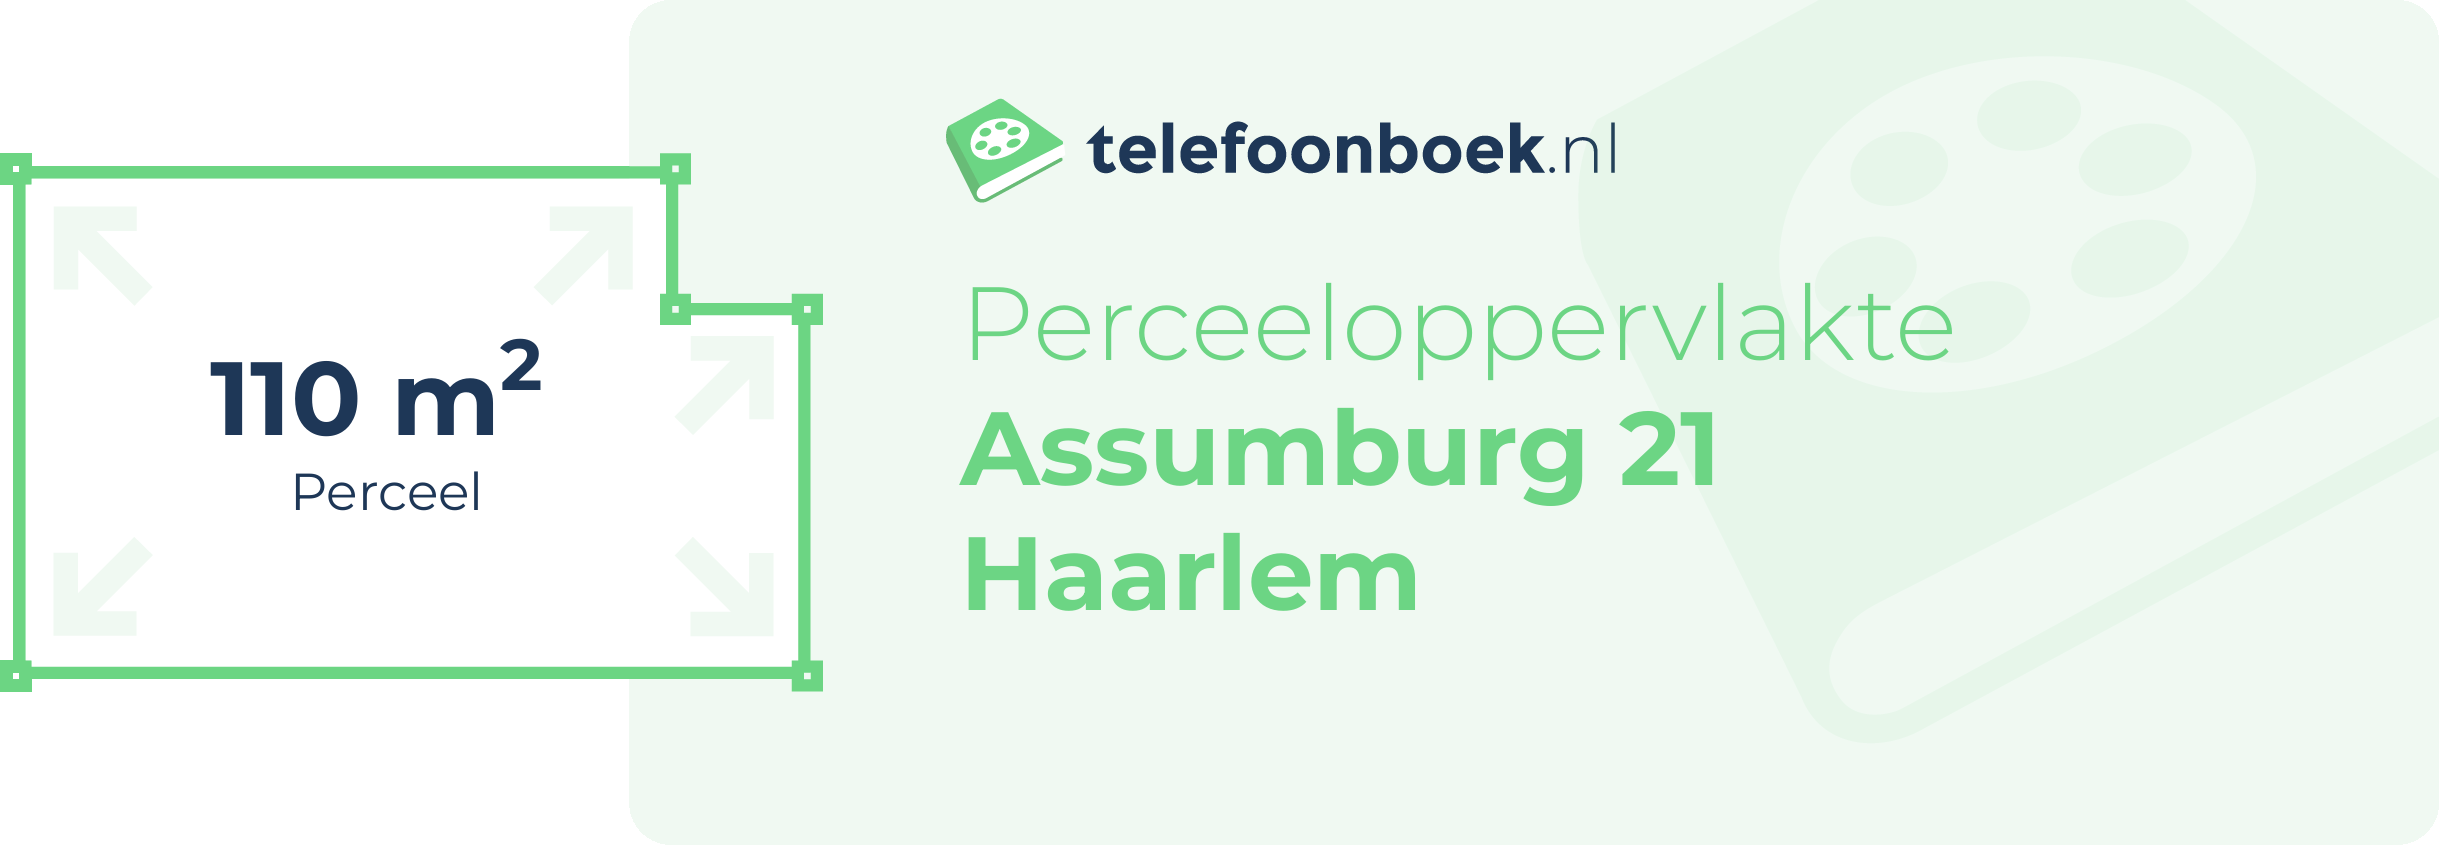 Perceeloppervlakte Assumburg 21 Haarlem